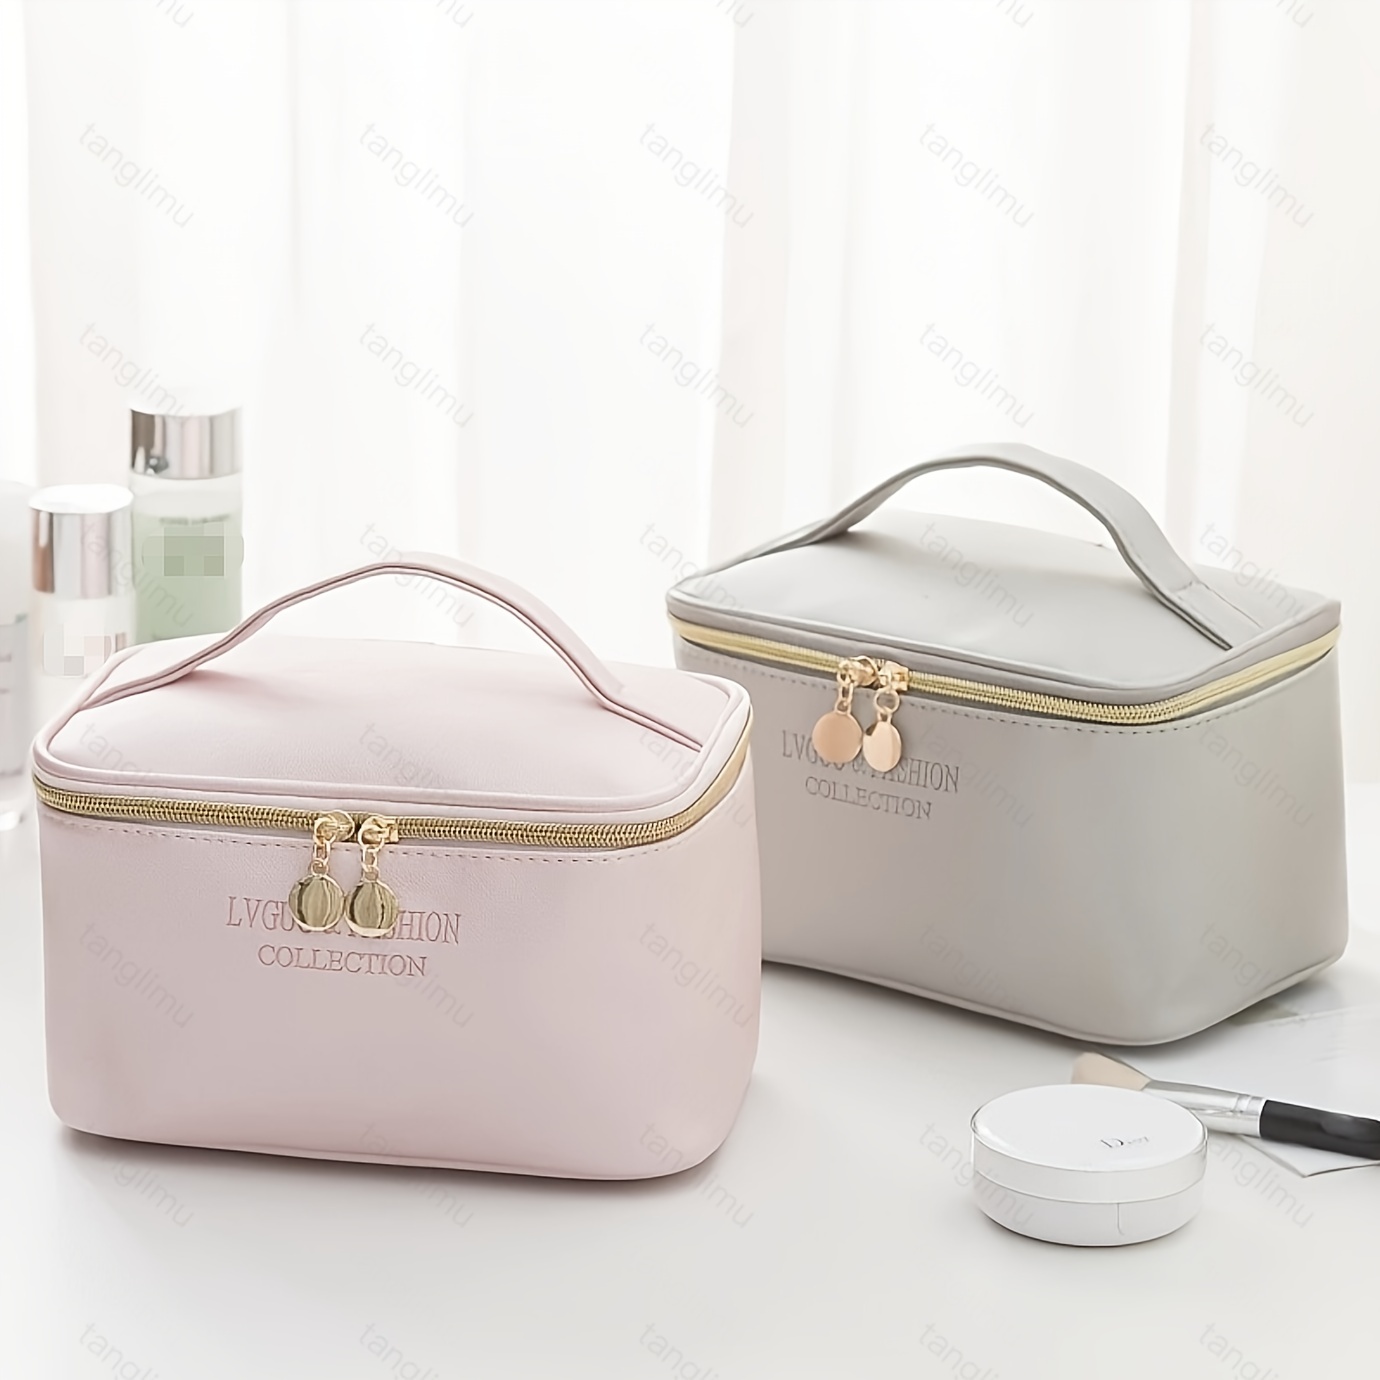 Louis Vuitton Toiletry Bag 25 review! Wear & Tear/What fits inside